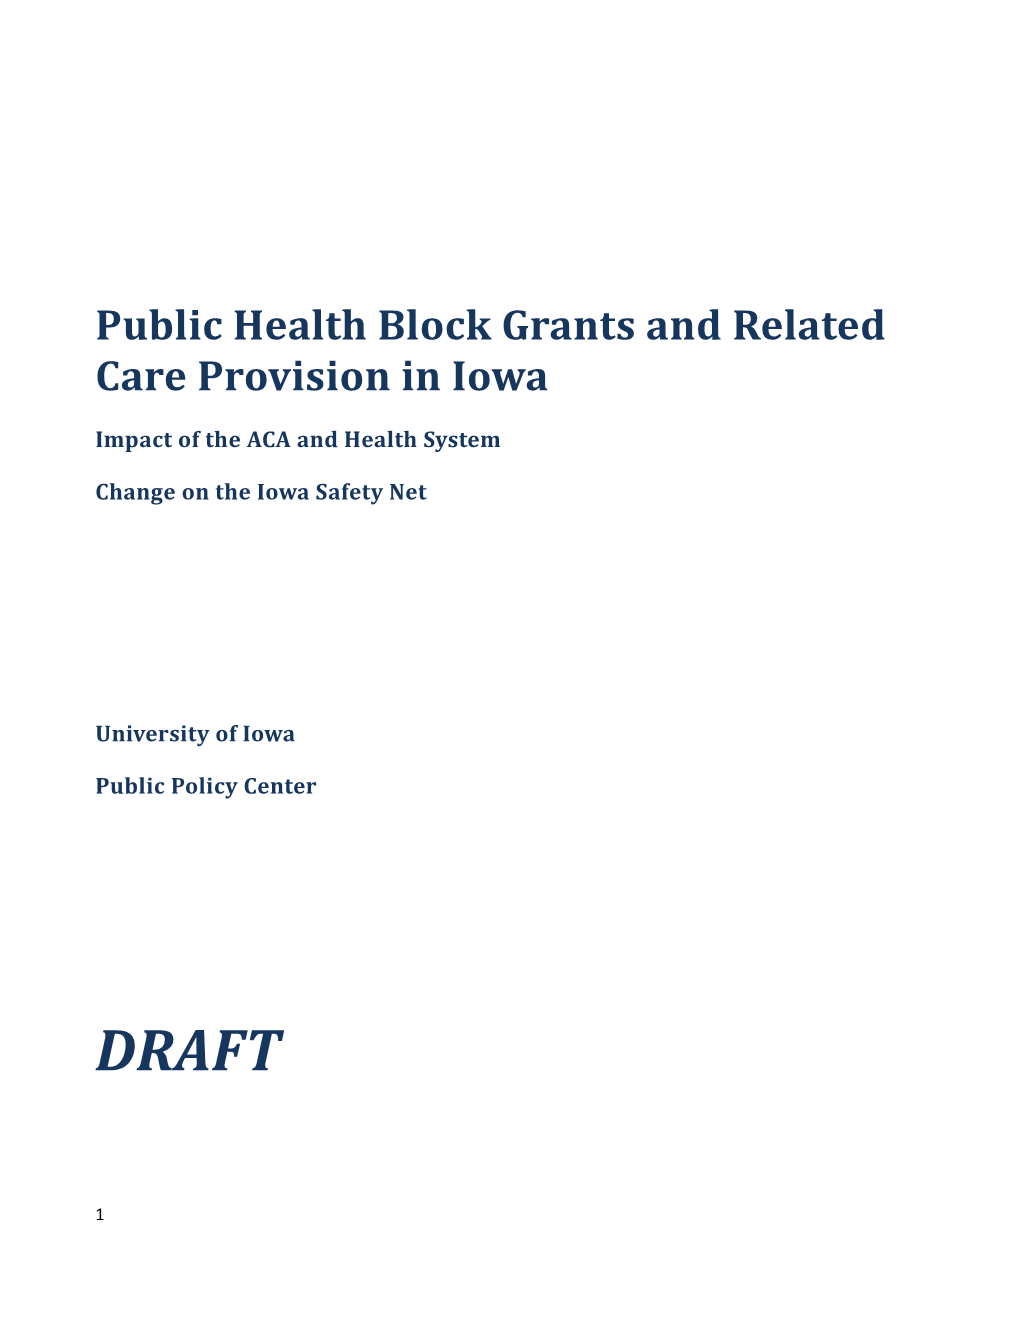 Public Health Block Grants and Related Care Provision in Iowa